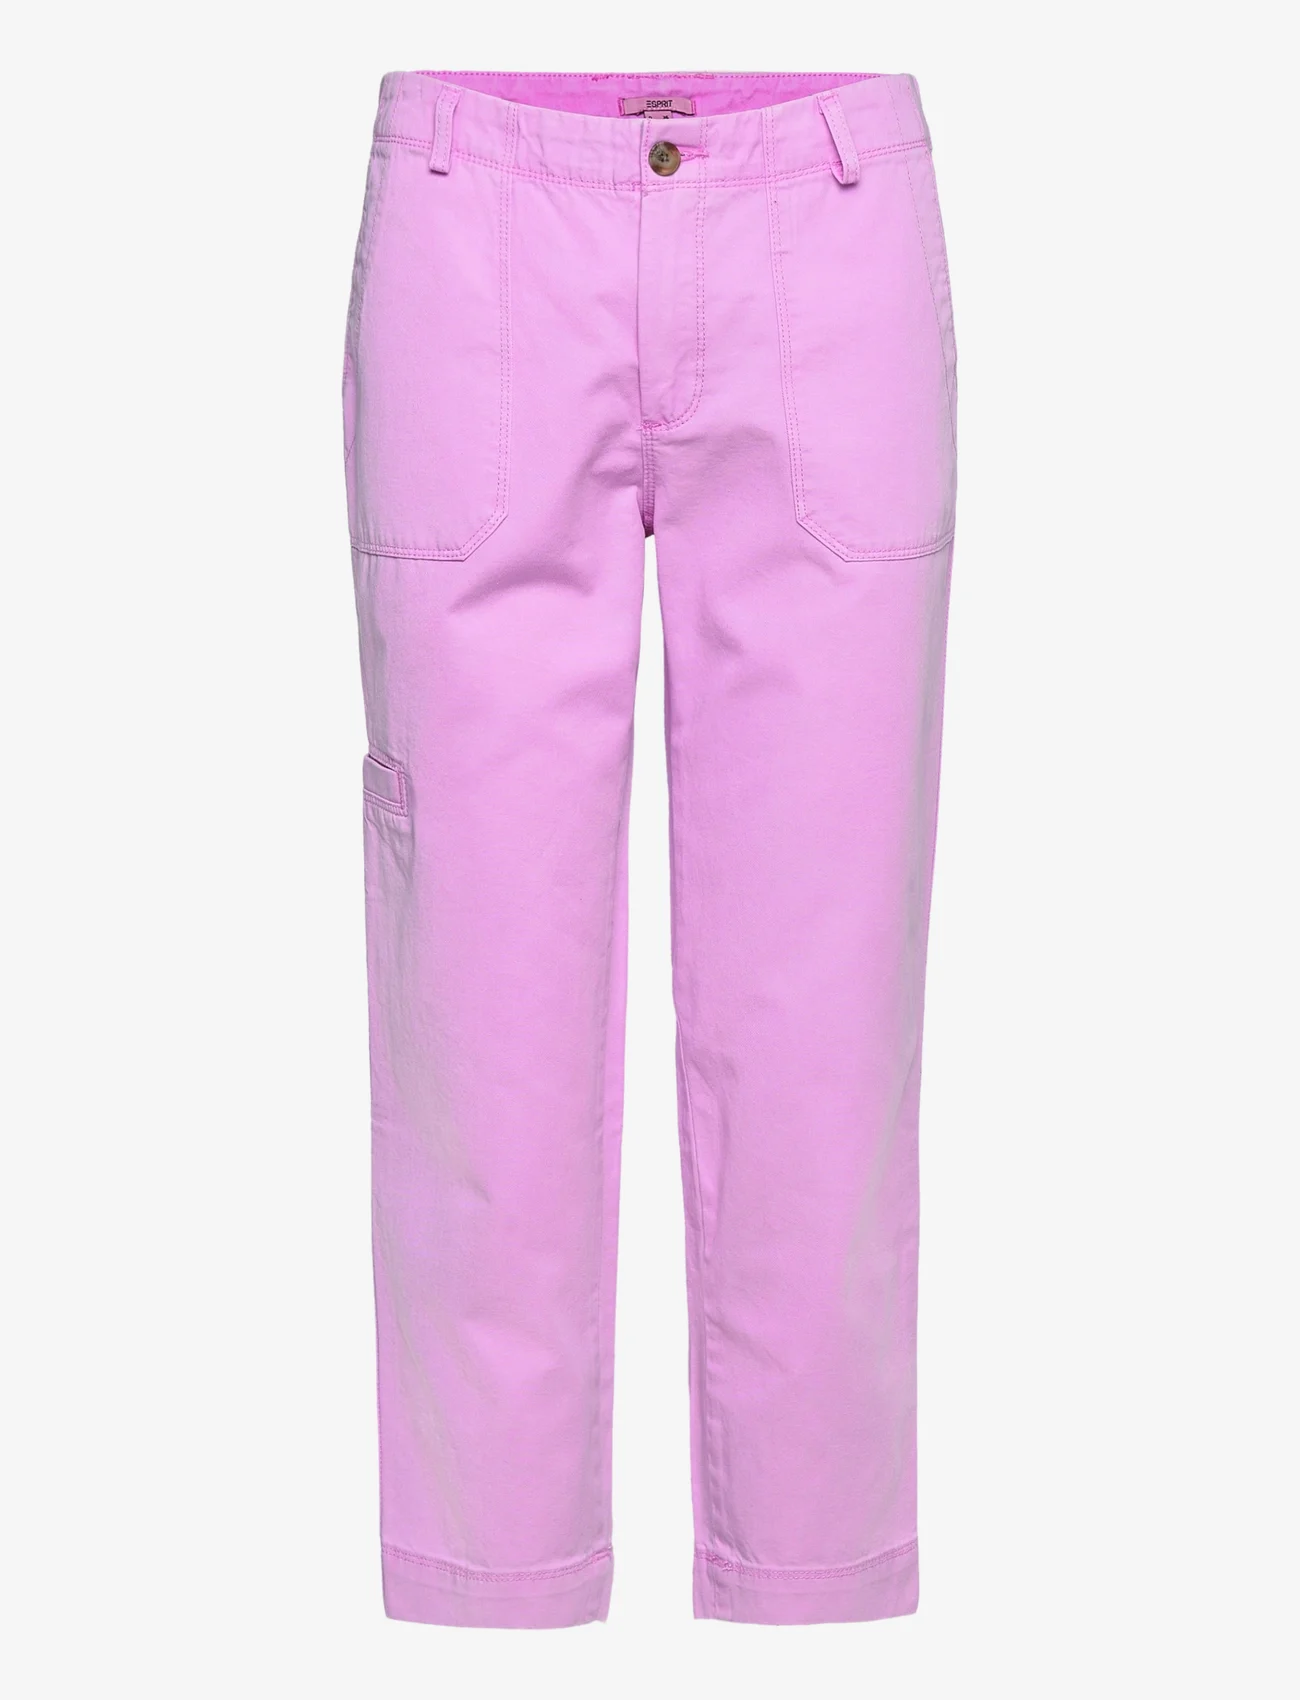 Esprit Casual - Women Pants woven regular - chino püksid - pink - 0